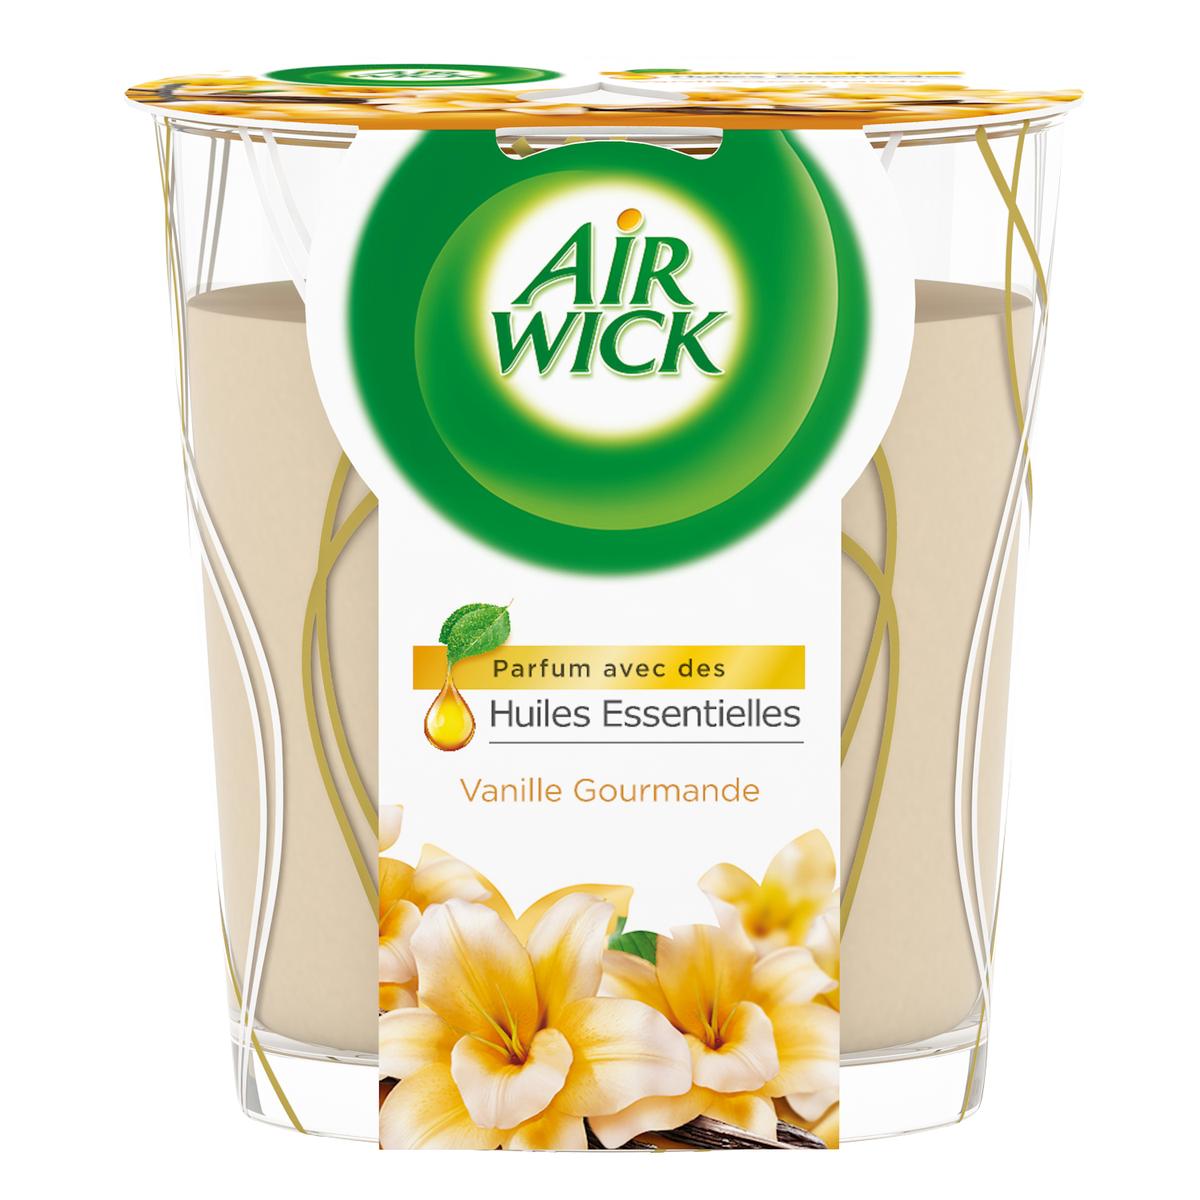 Acheter Air Wick Bougie essentiel infusion vanille gourmande, 1 pièce